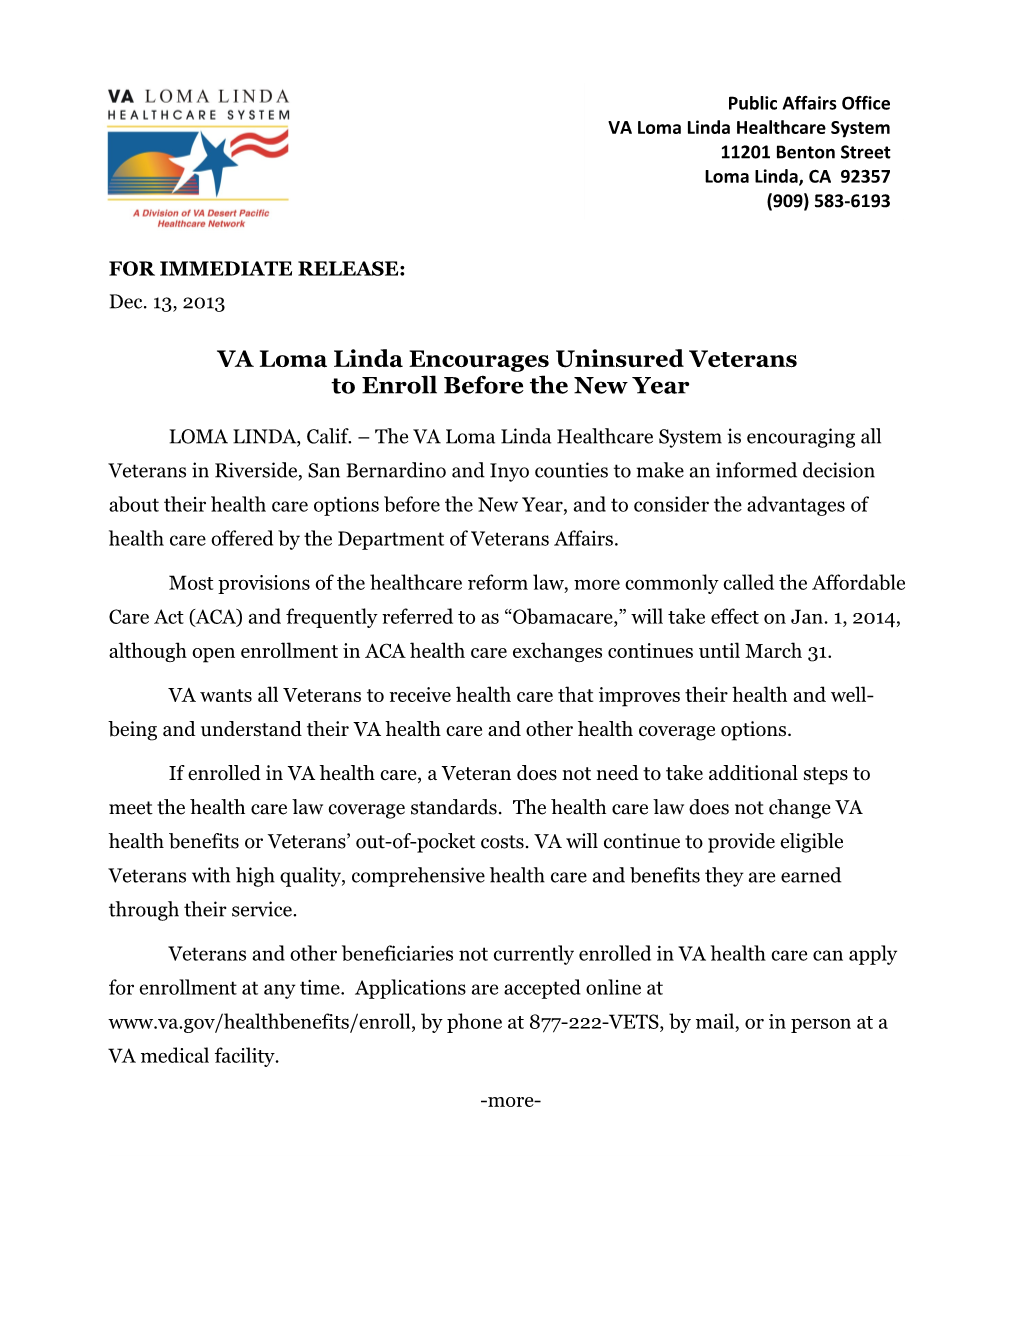 VA Loma Lindaencouragesuninsured Veterans